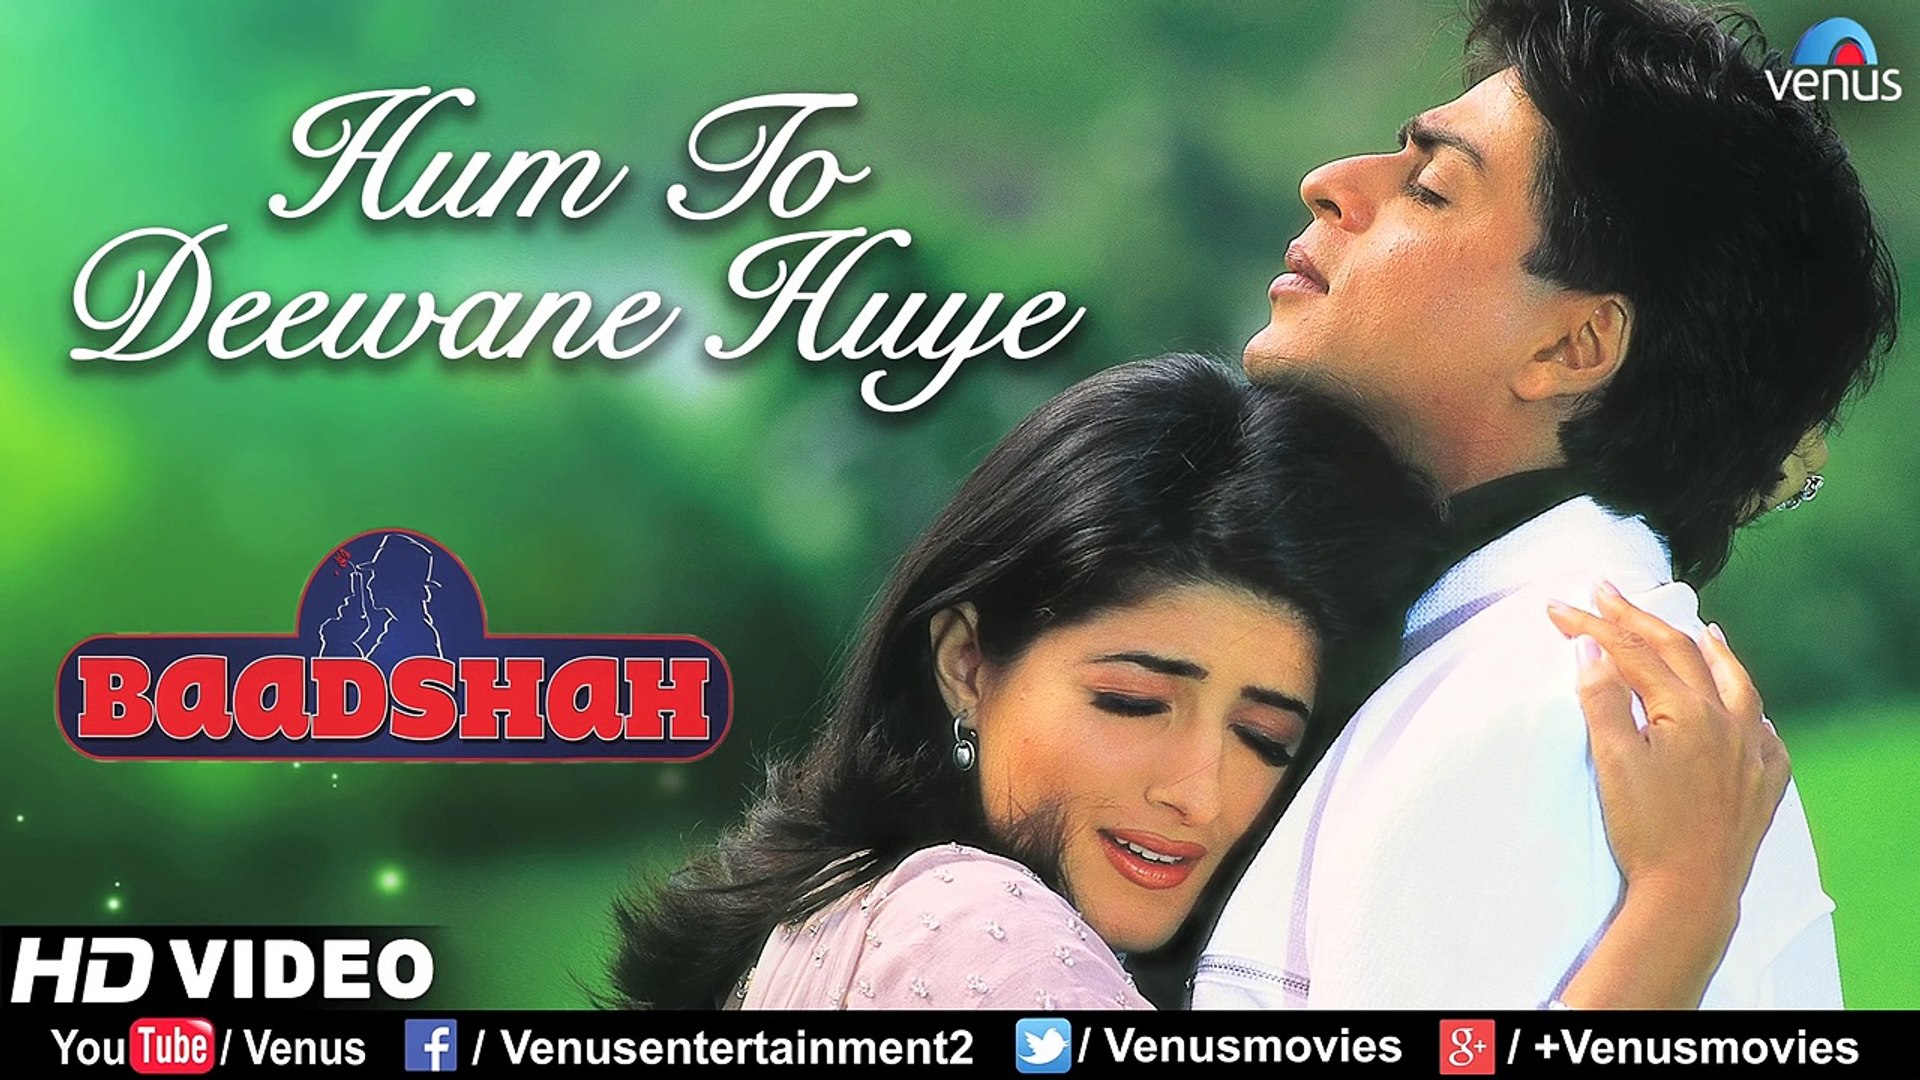 Hum To Deewane Huye -HD VIDEO - Shahrukh Khan & Twinkle Khanna - Baadshah  -90's Romantic Hindi Song - video Dailymotion